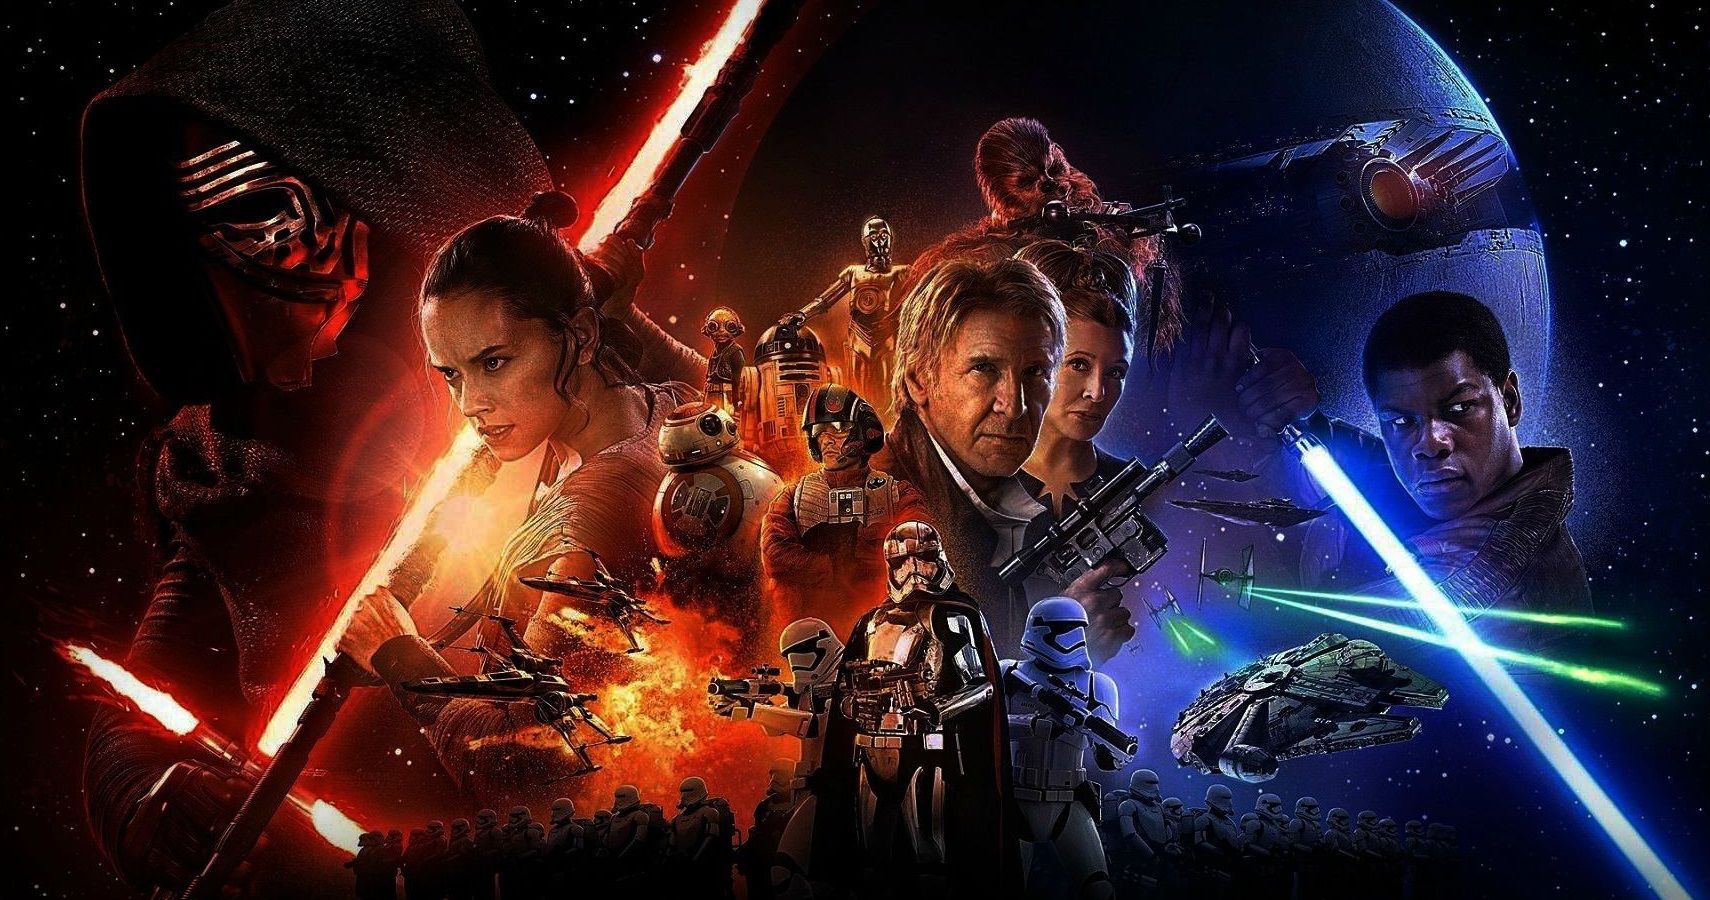 star wars the force awakens movie times bryan tx